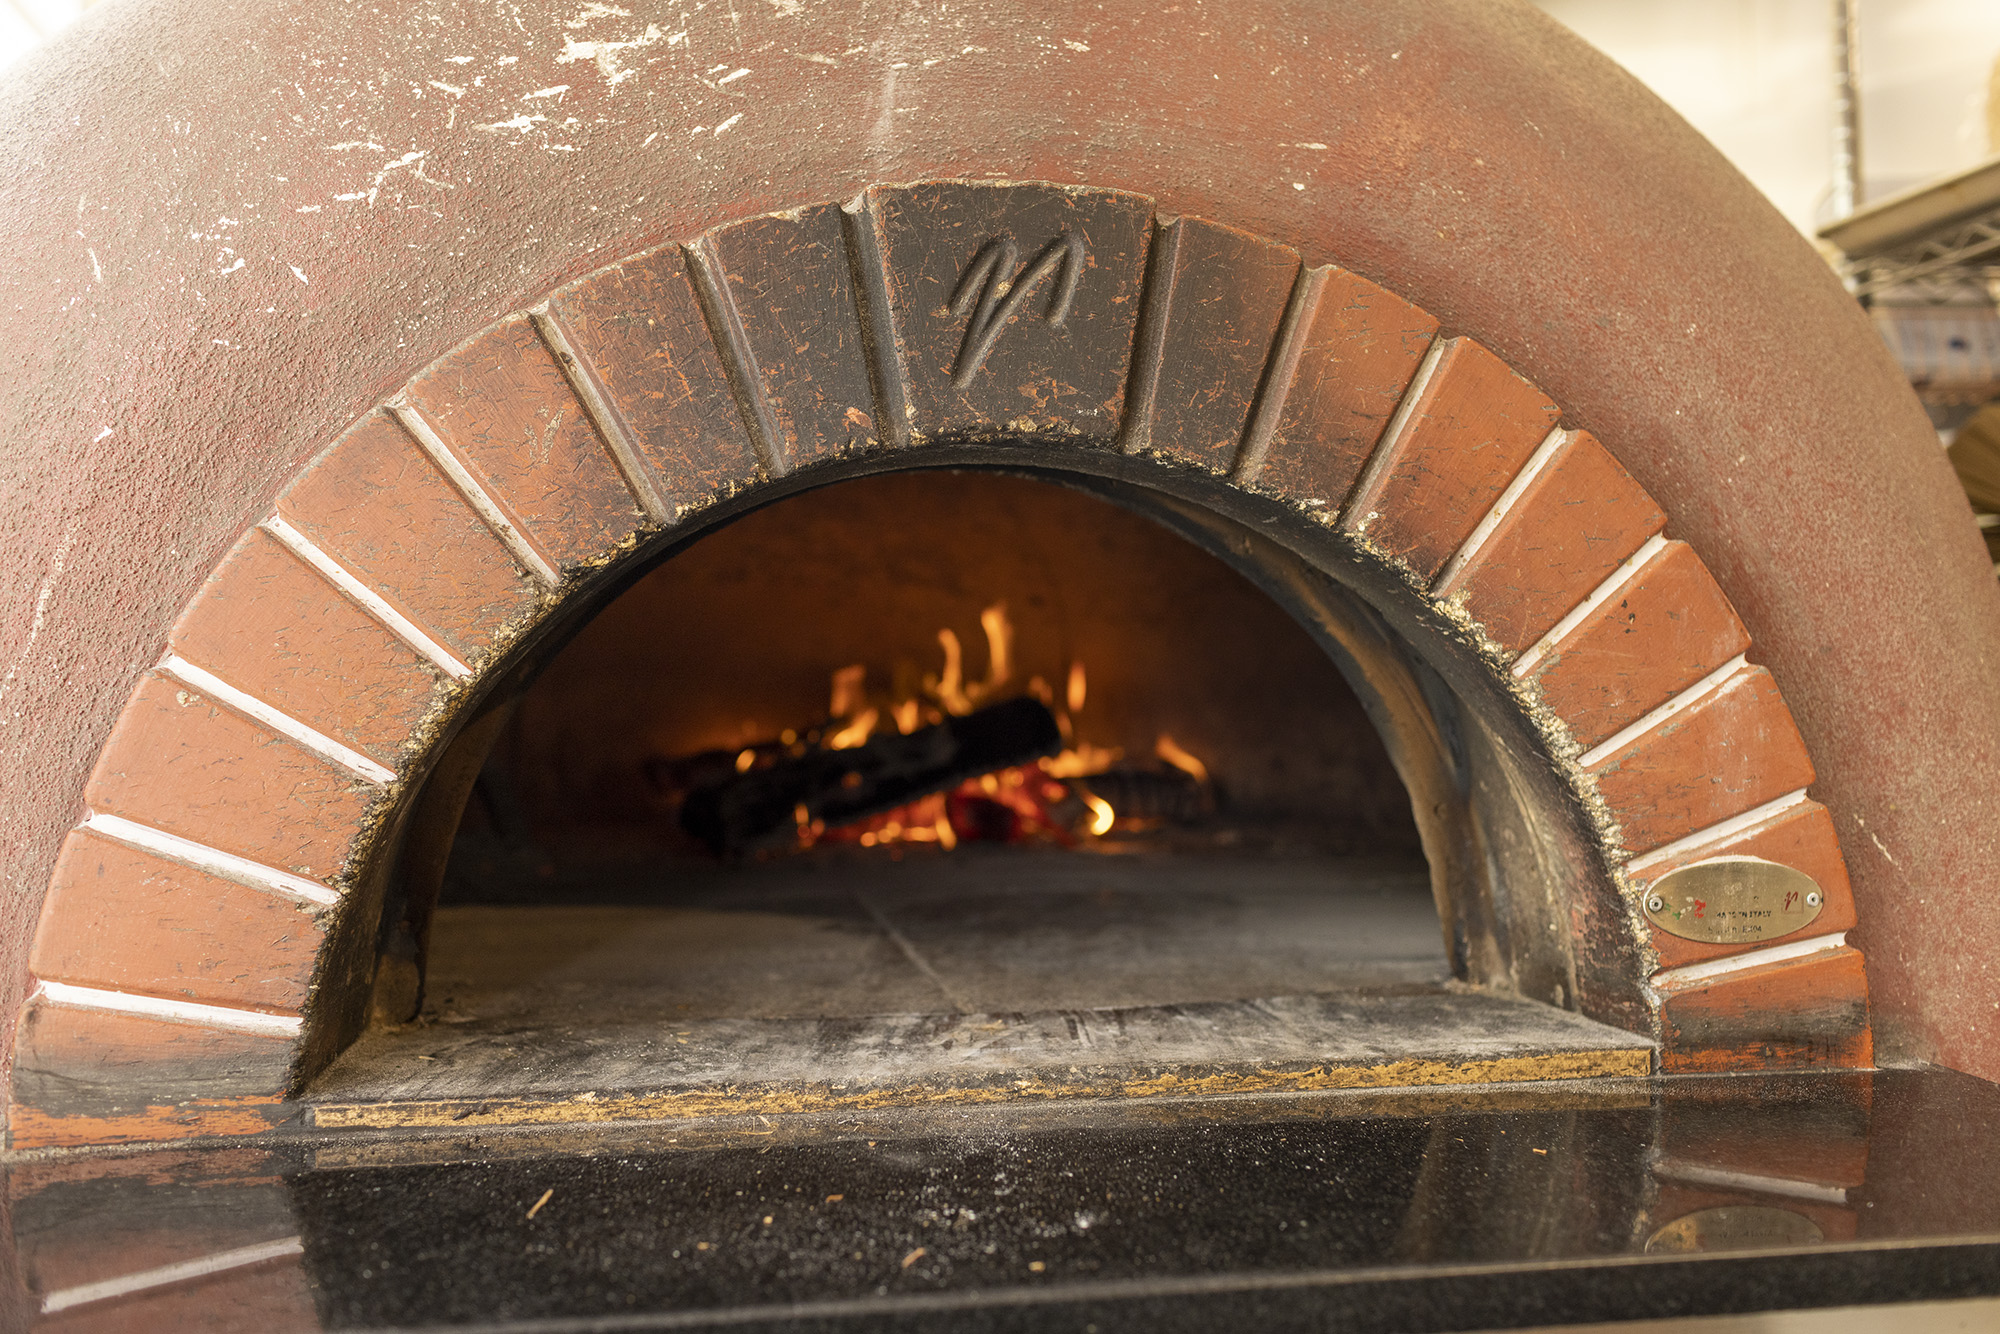 Mugnaini Pwood fire pizza over with fire inside.